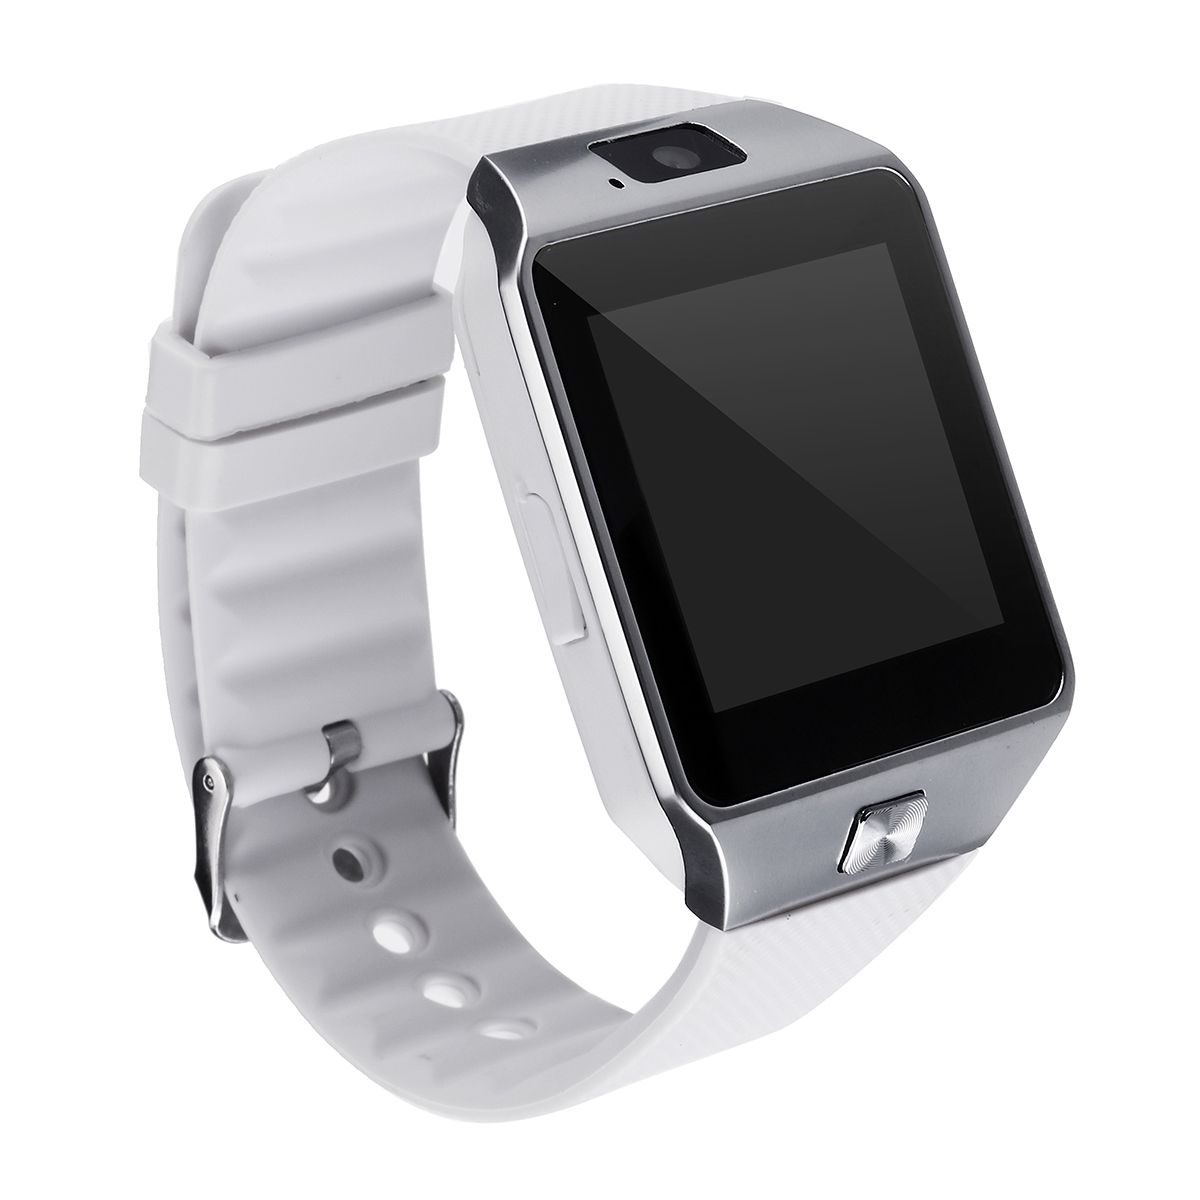 GITZN09-156-Inch-Display-30W-Pixel-bluetooth-30-Smart-Watch-1658660